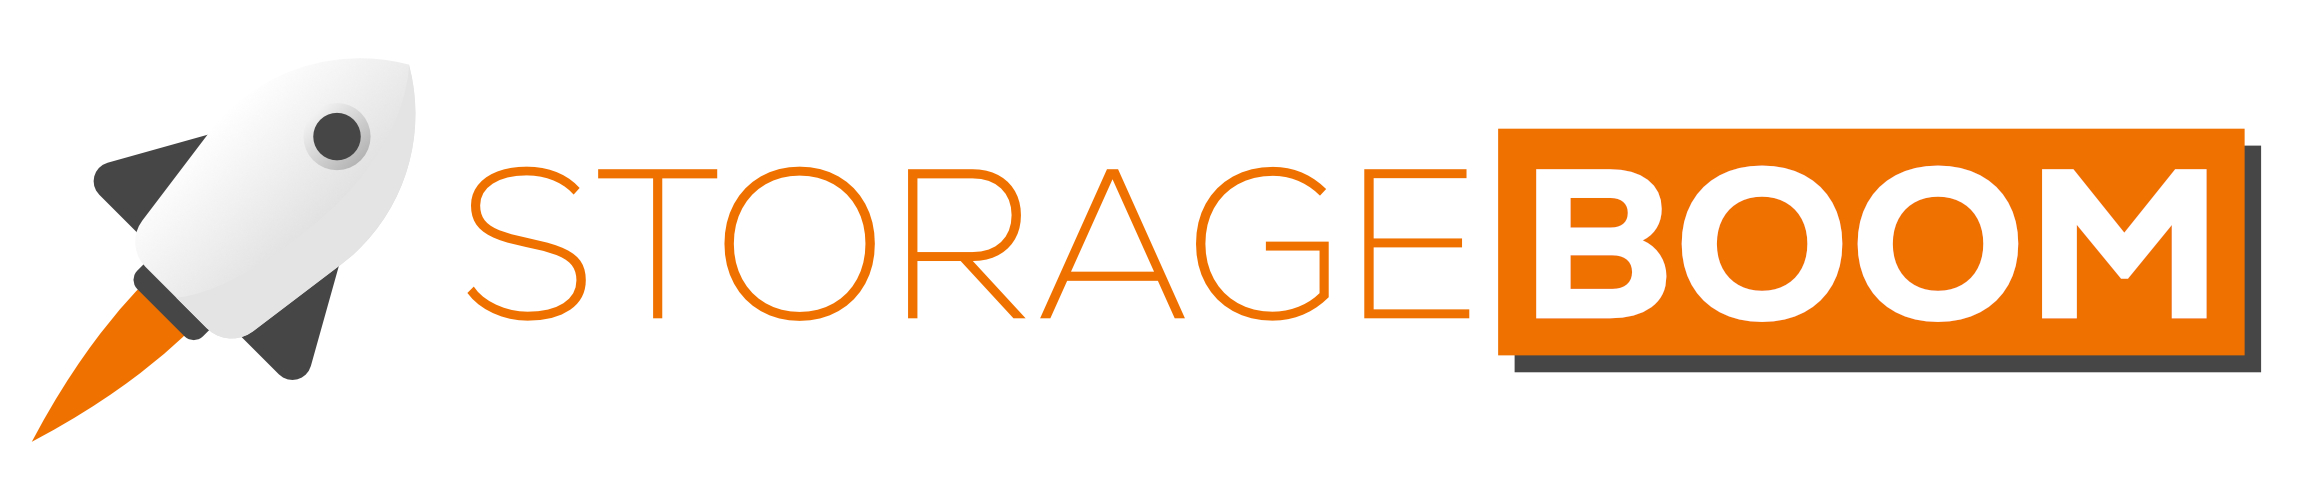 Storage Boom logo